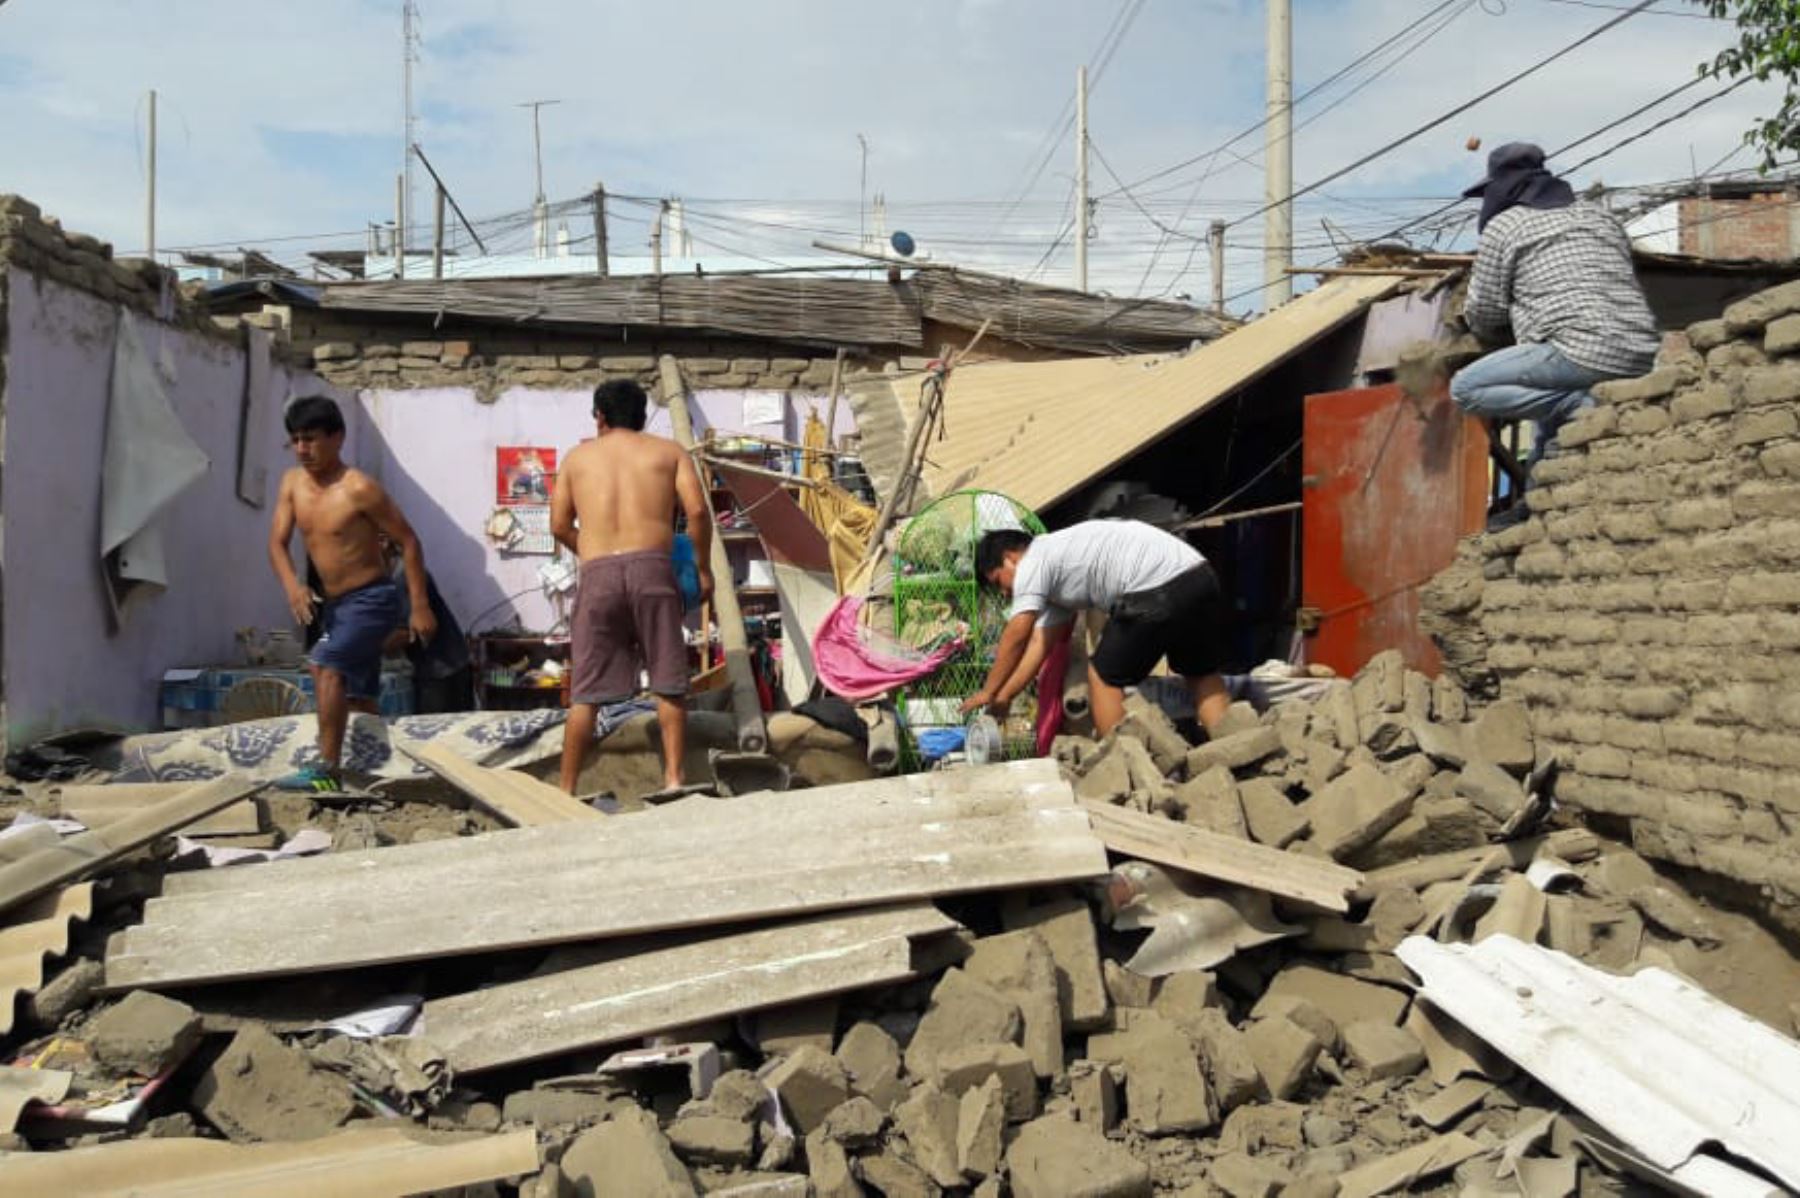 El sismo de magnitud 5.3, que remeció esta tarde Chimbote, provocó el colapso de una vivienda. Foto: ANDINA/Gonzalo Horna